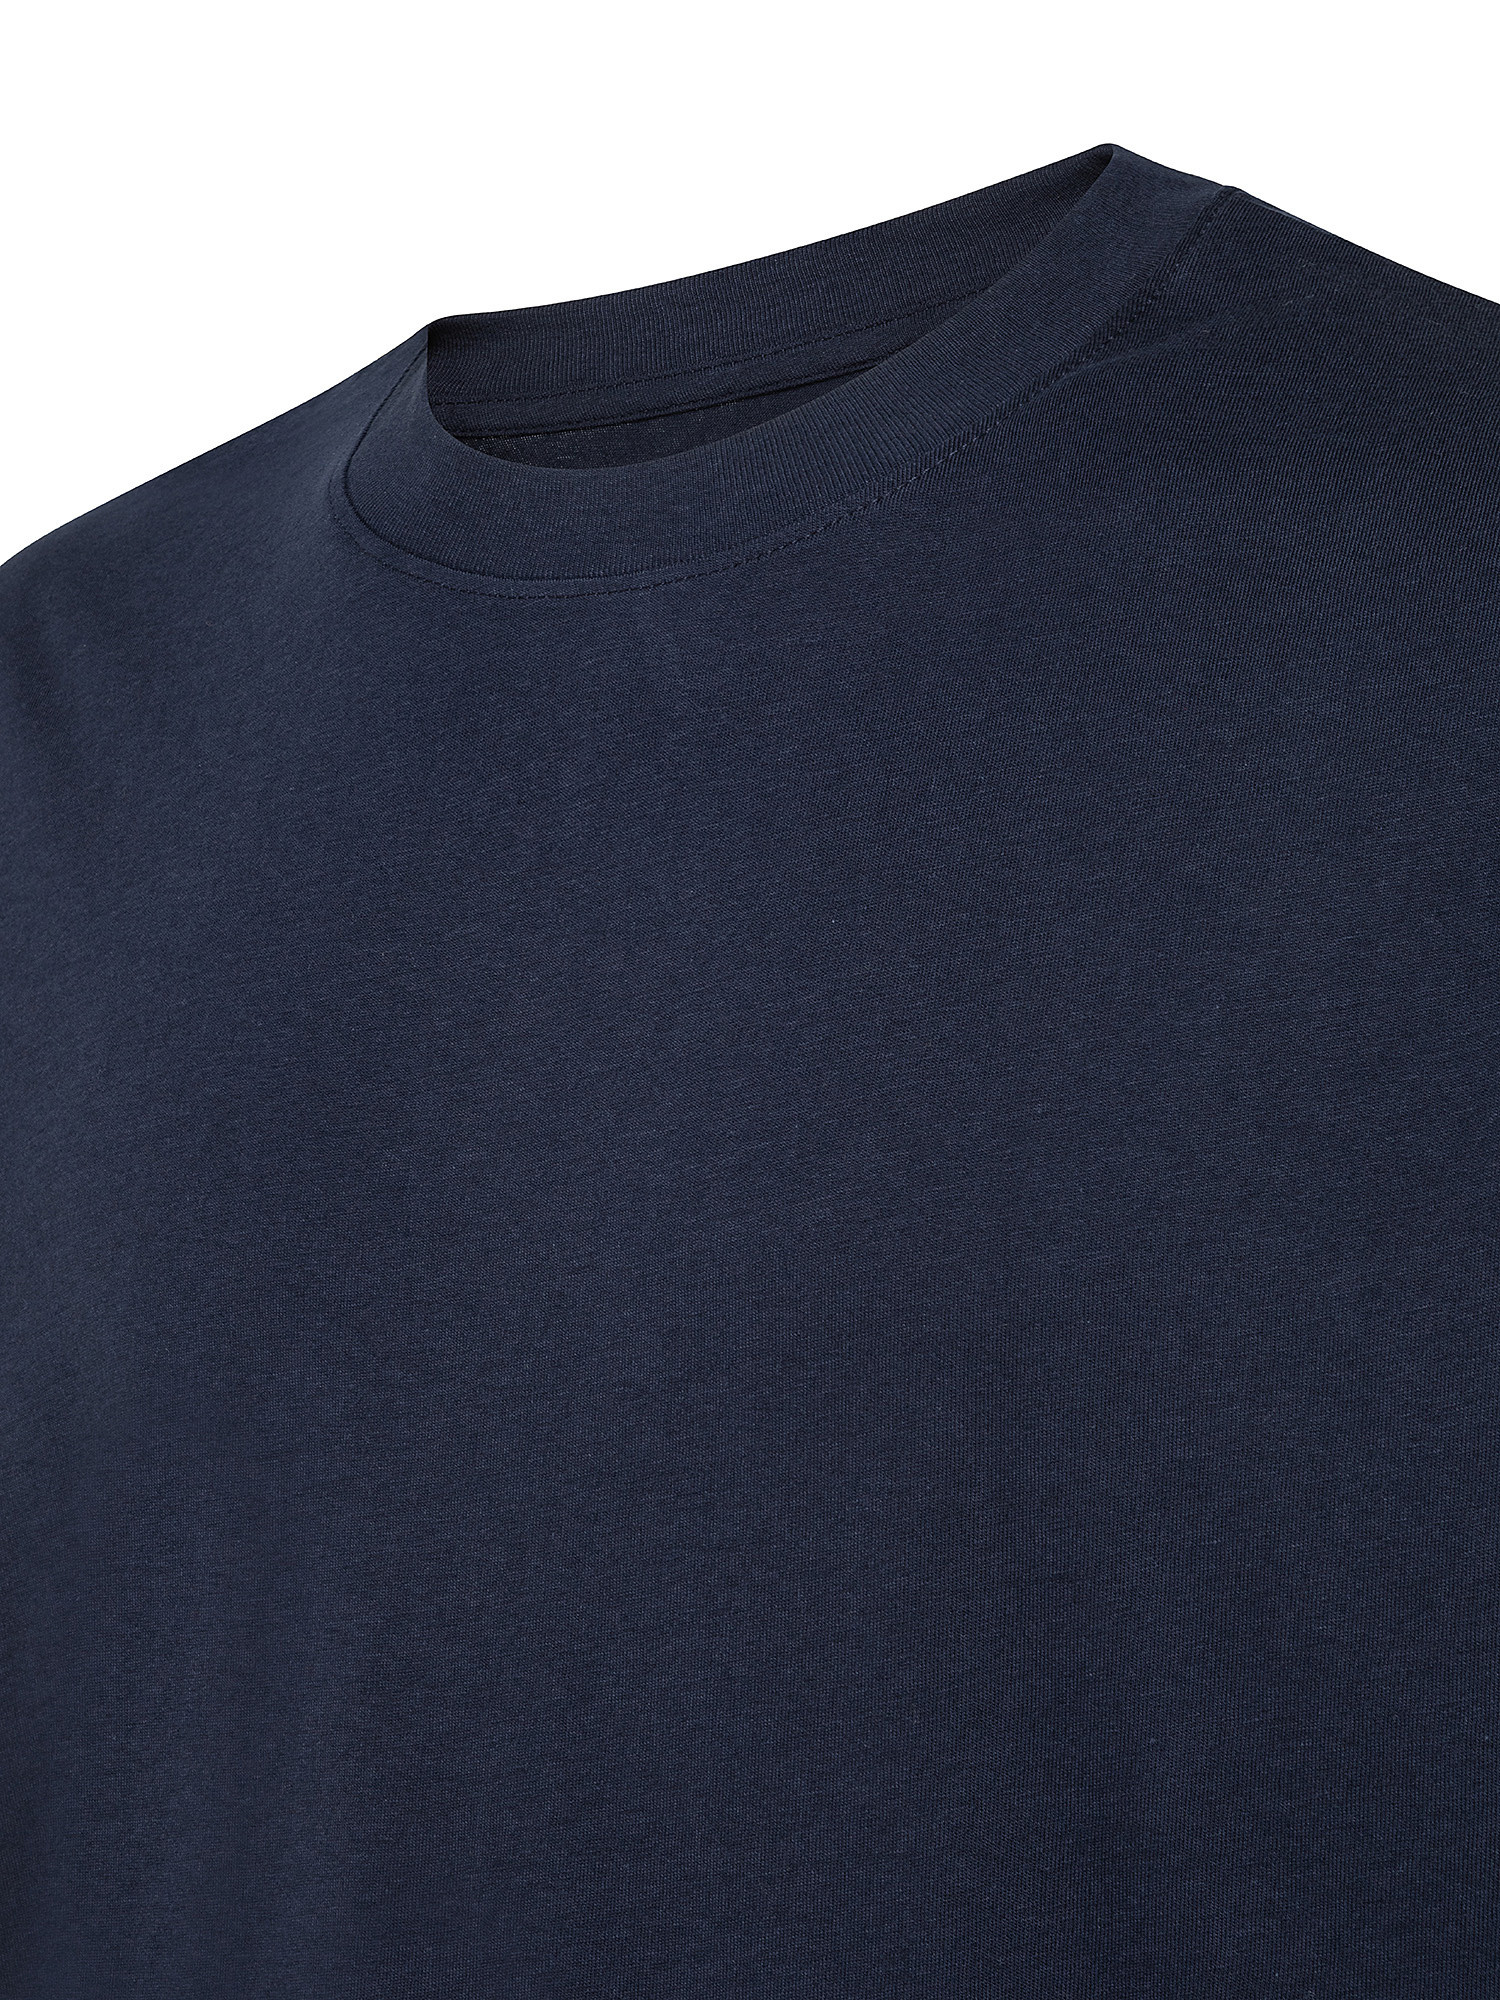 T-shirt 100% cotone, Blu, large image number 2